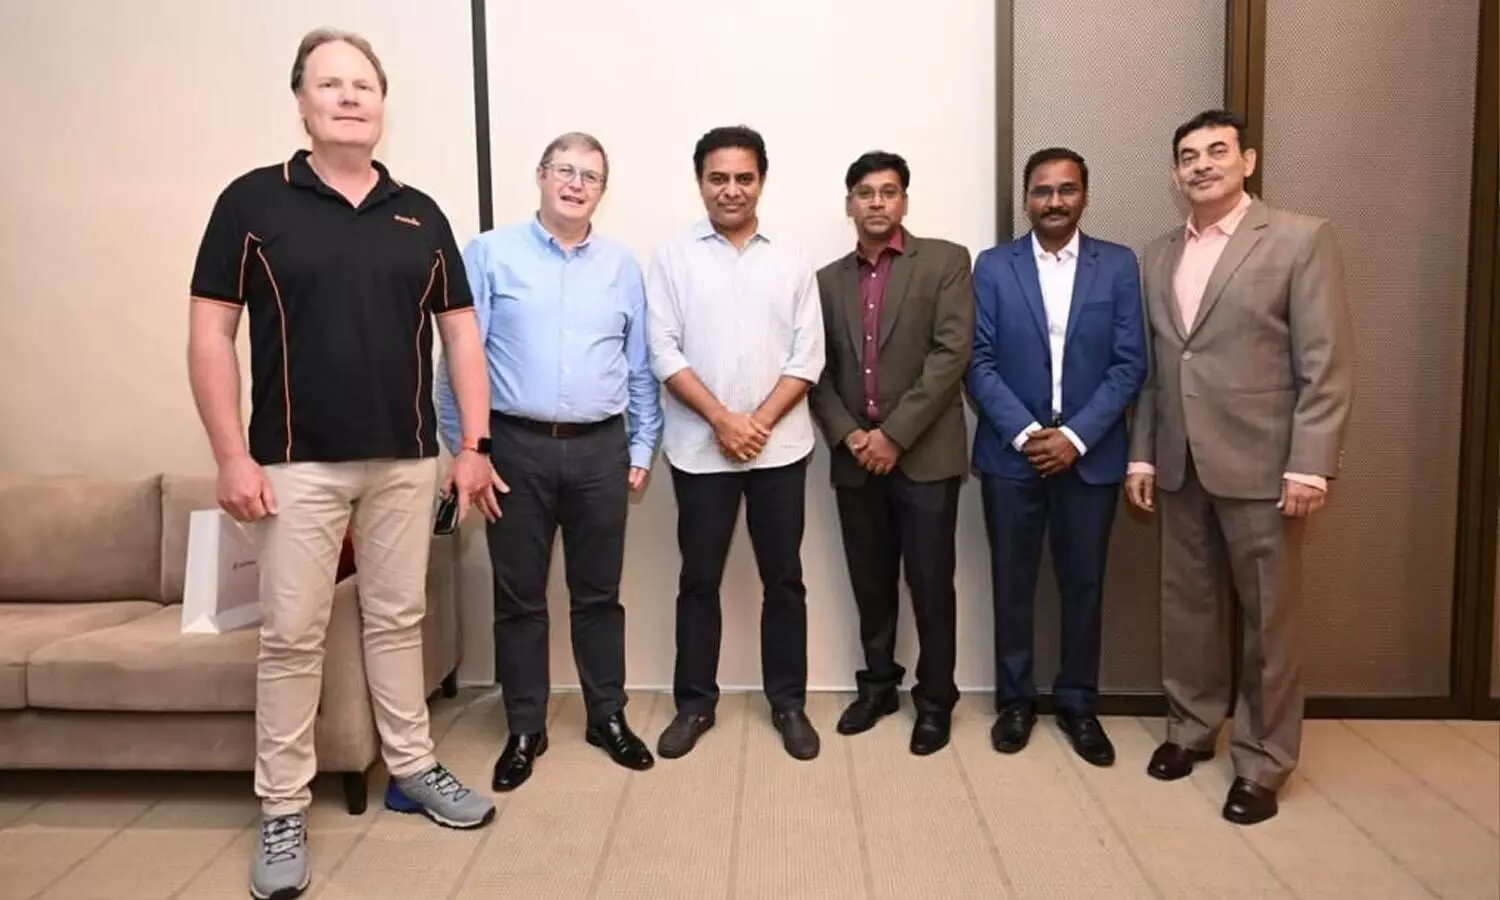 Moodle acquires Hyderabad-based edtech startup eAbyas